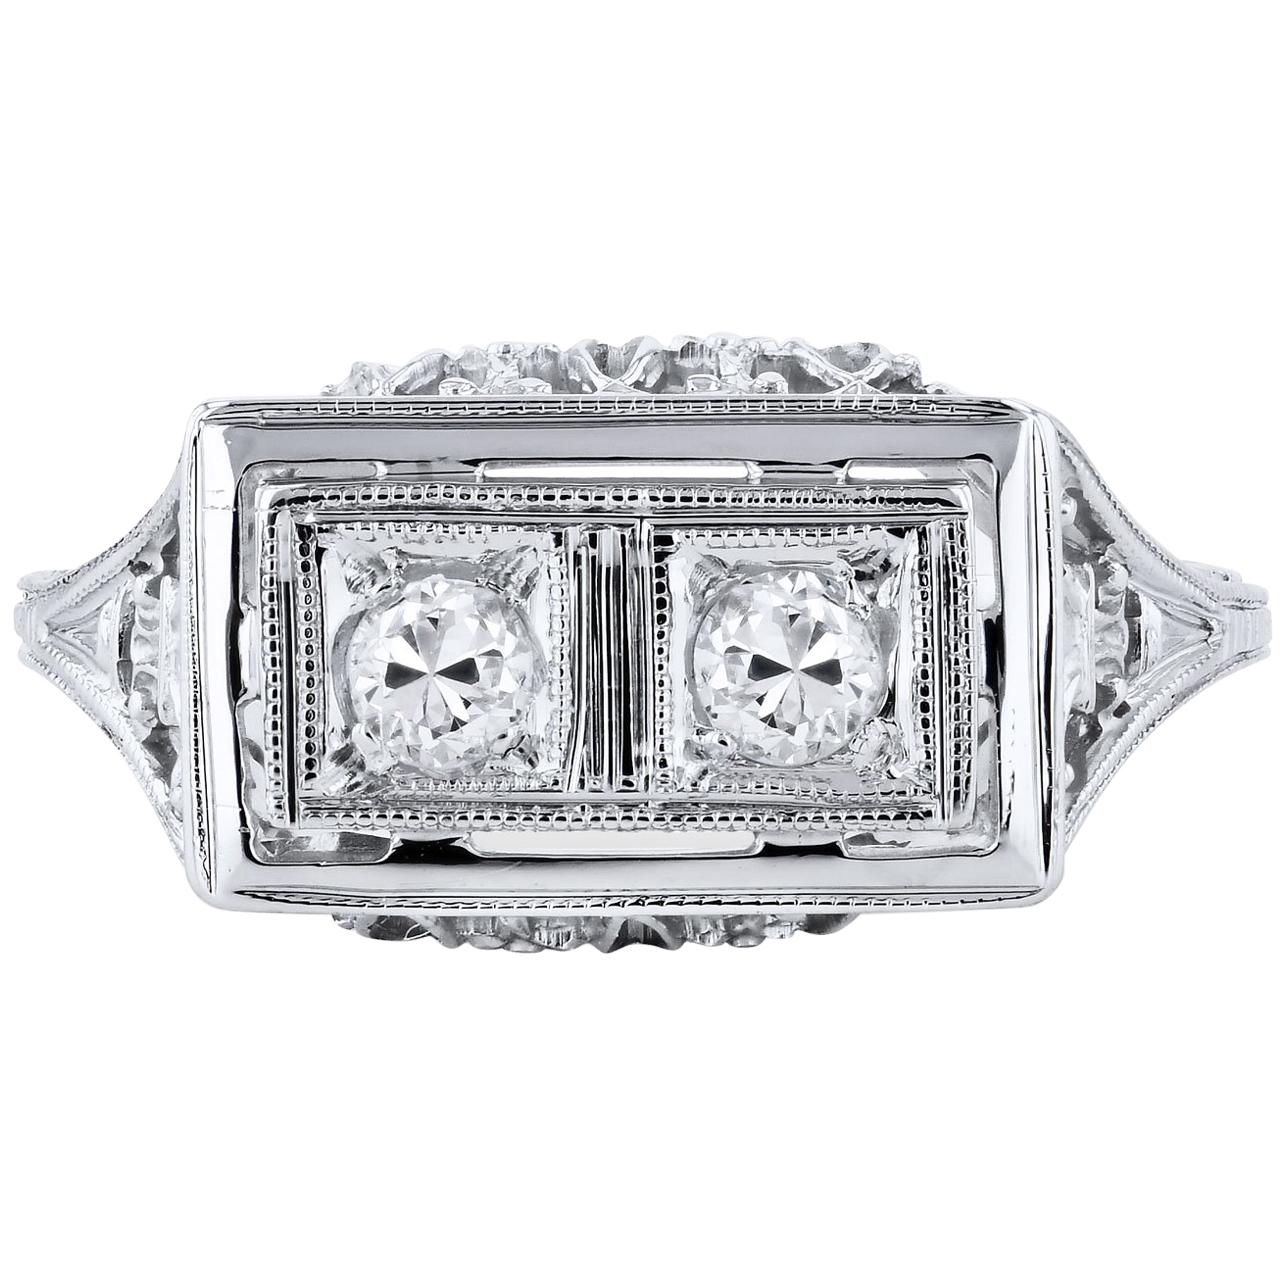 Vintage Estate 0.20 Carat Transitional Cut Diamond Engagement Ring Size 3.75